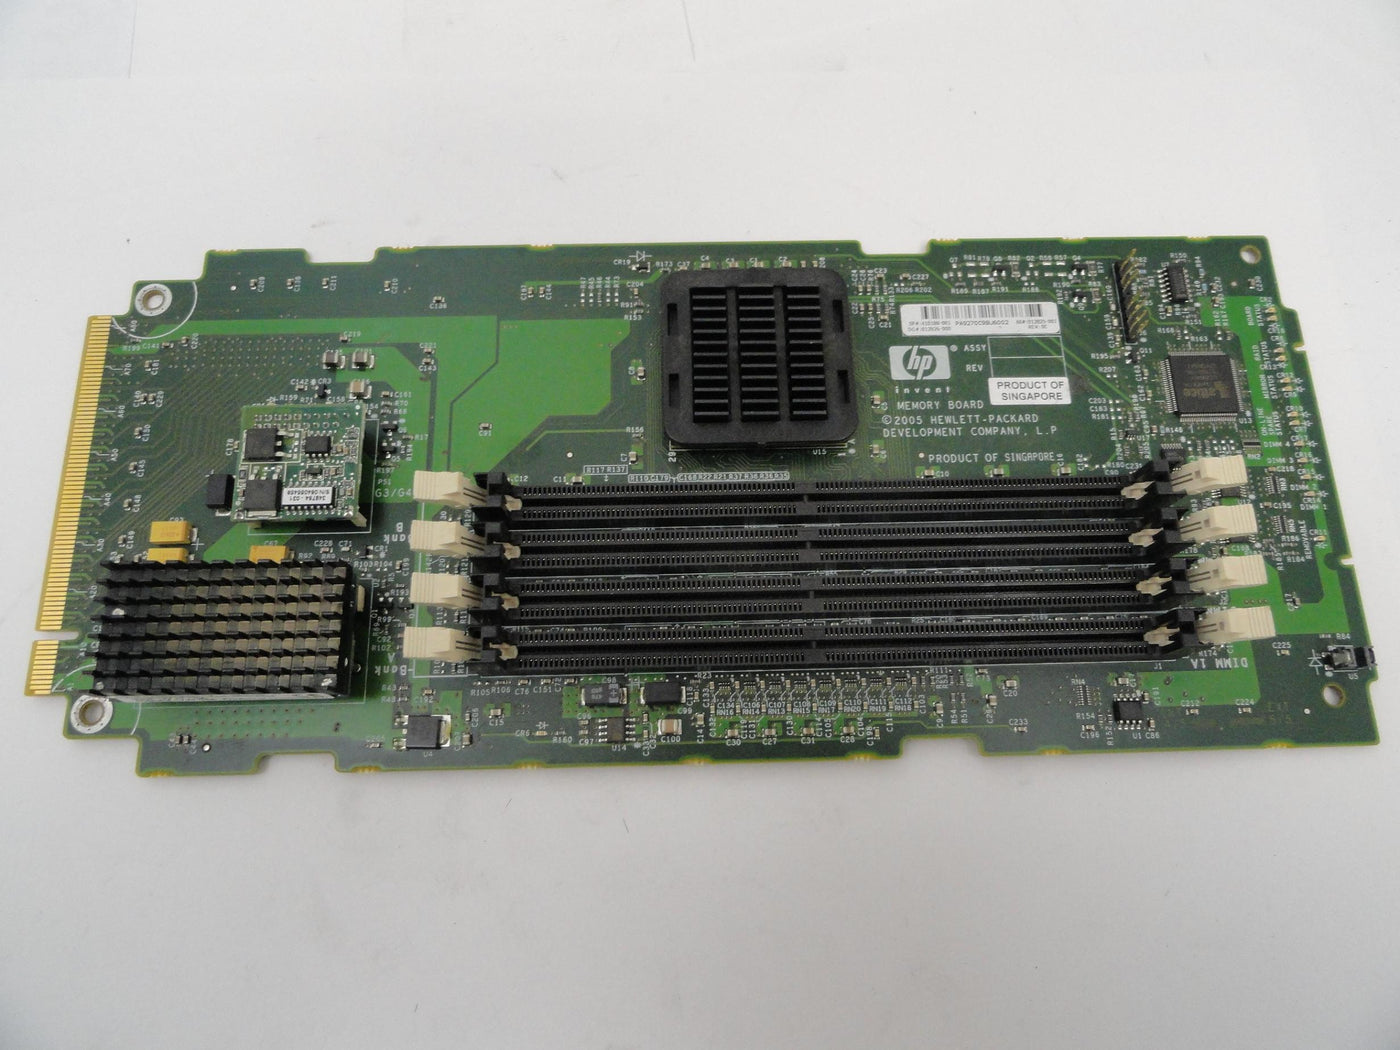 012825-001 - HP Memory Installation board from DL580 G4 Server - Refurbished